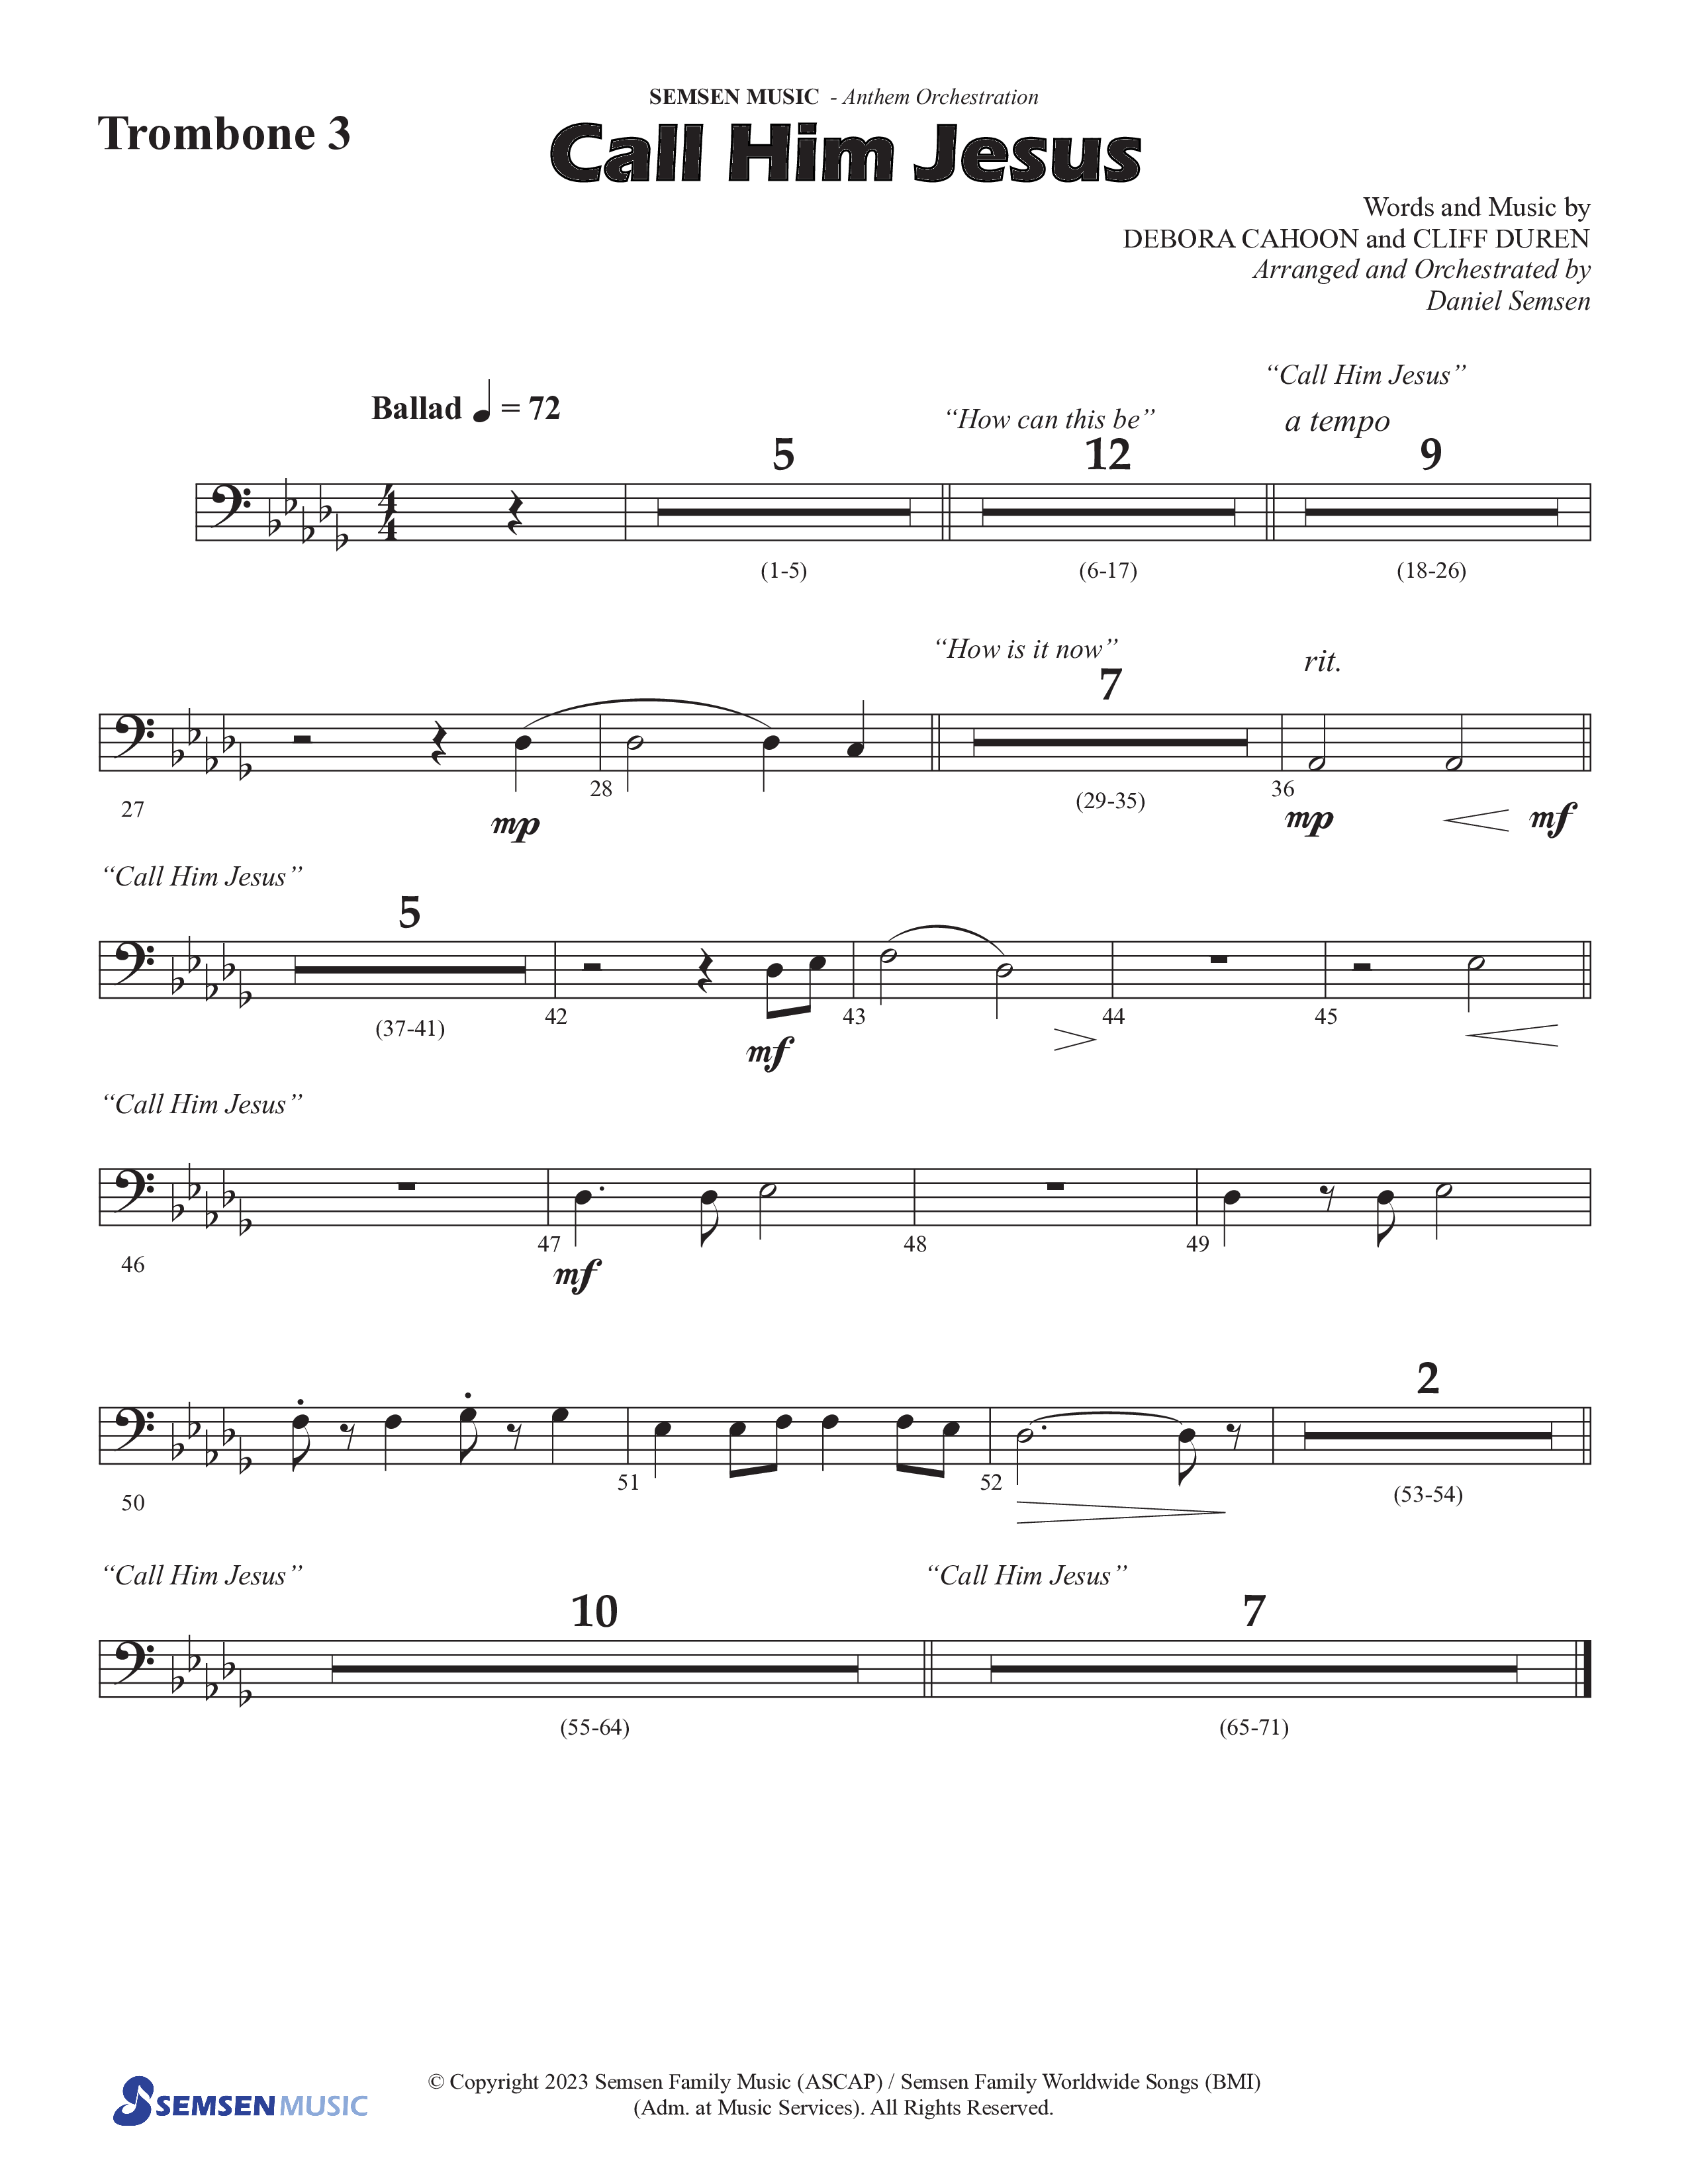 Call Him Jesus (Choral Anthem SATB) Trombone 3 (Semsen Music / Arr. Daniel Semsen)